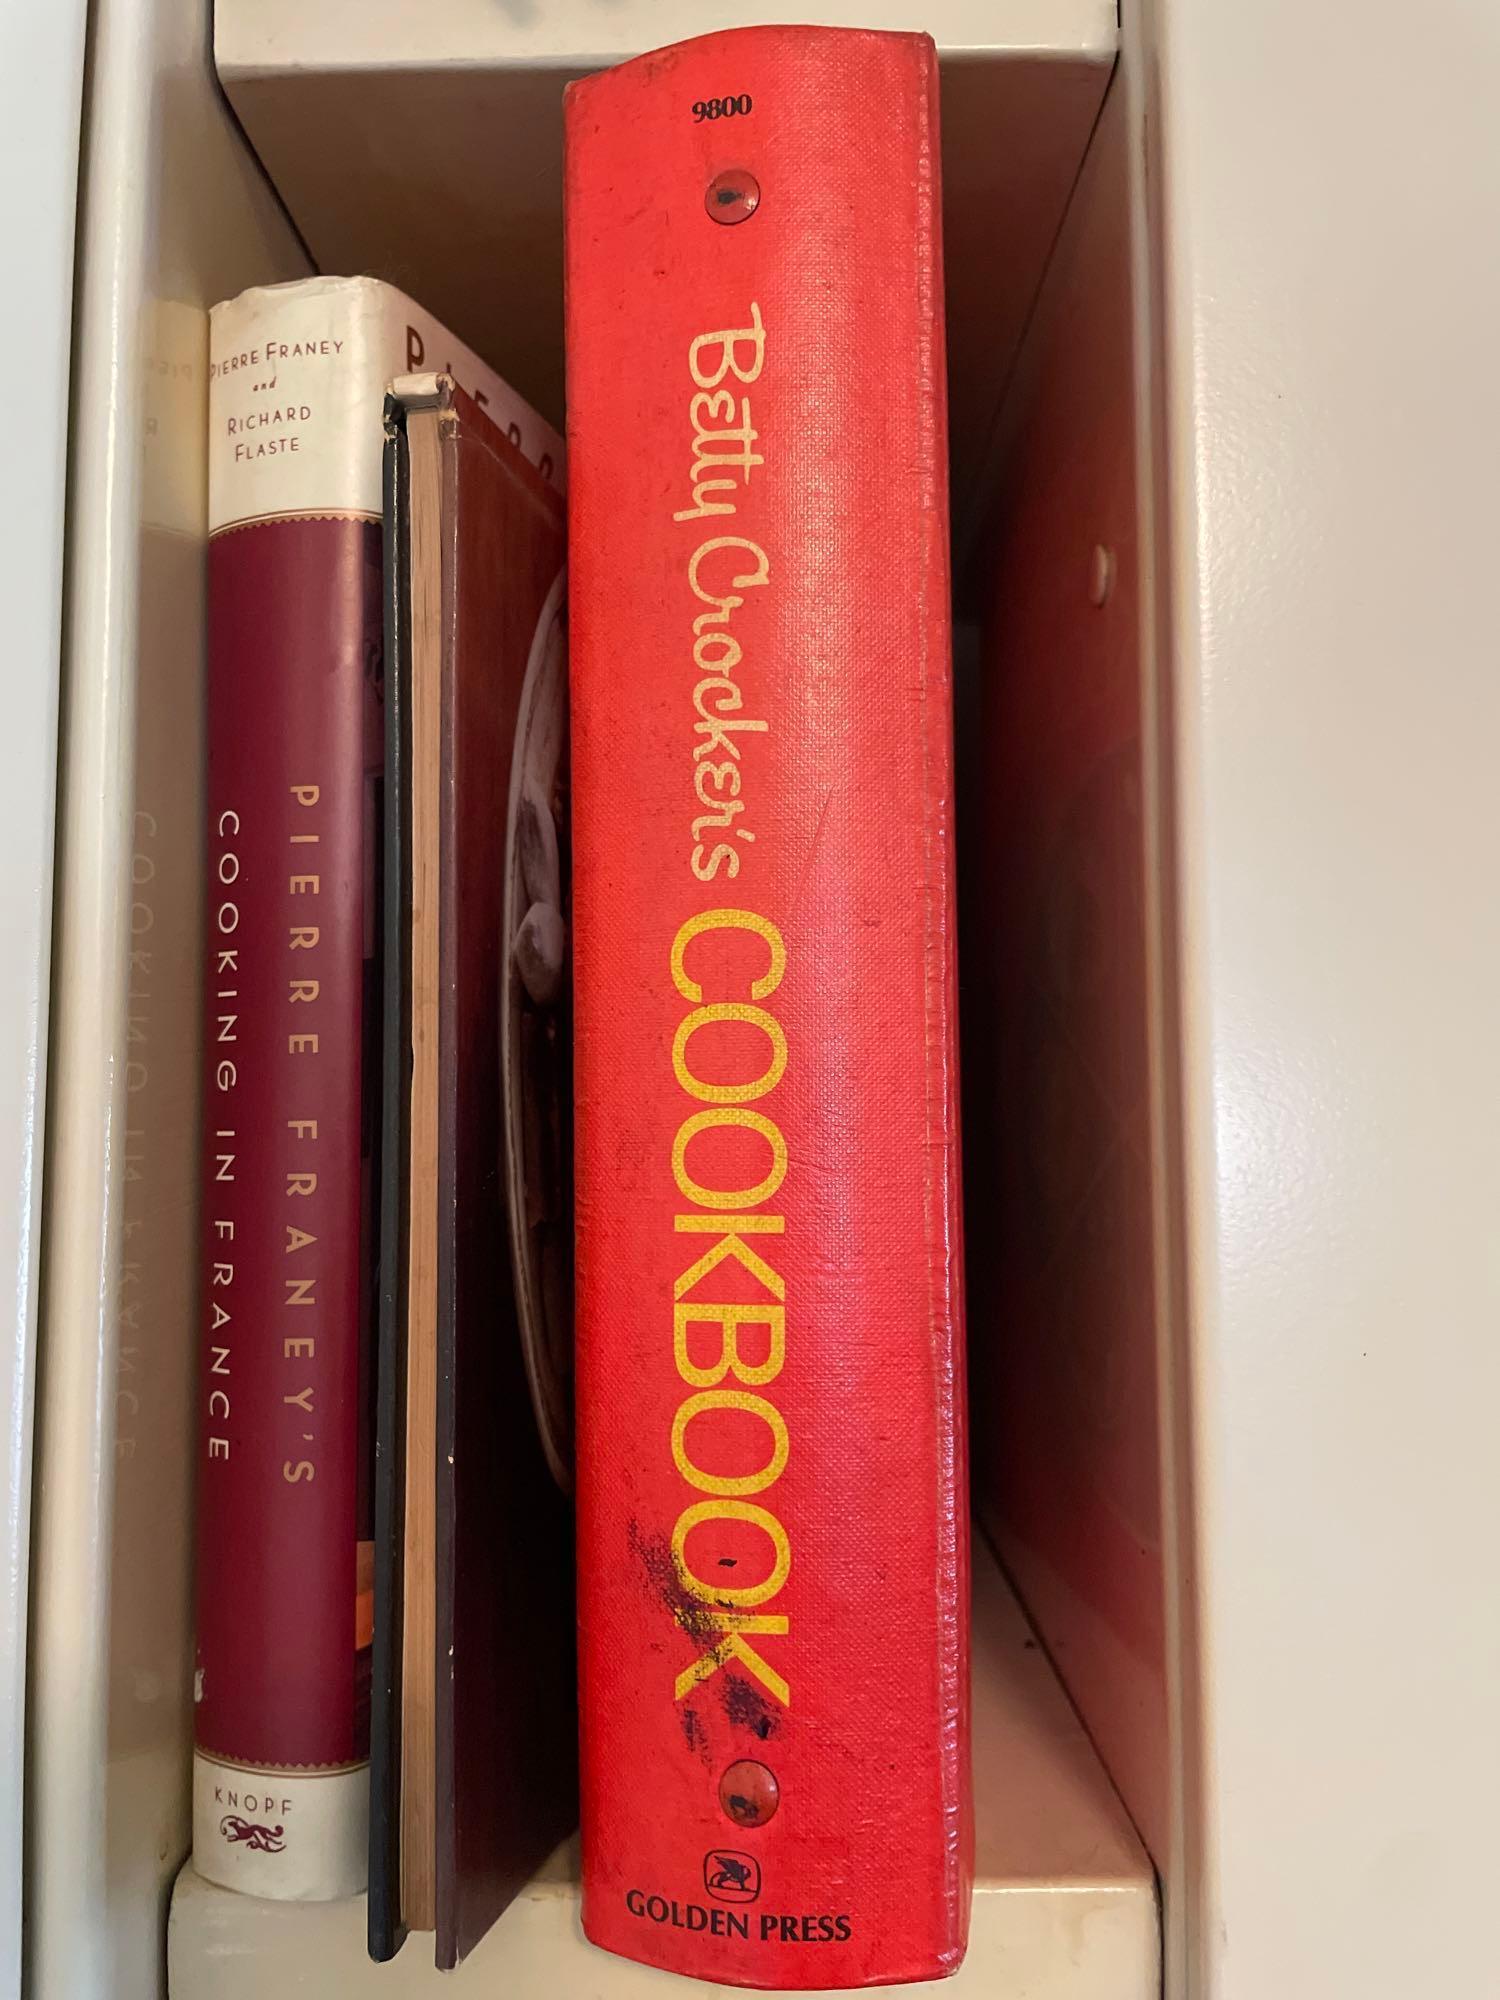 Assorted Cookbooks, Lightbulbs, Decor